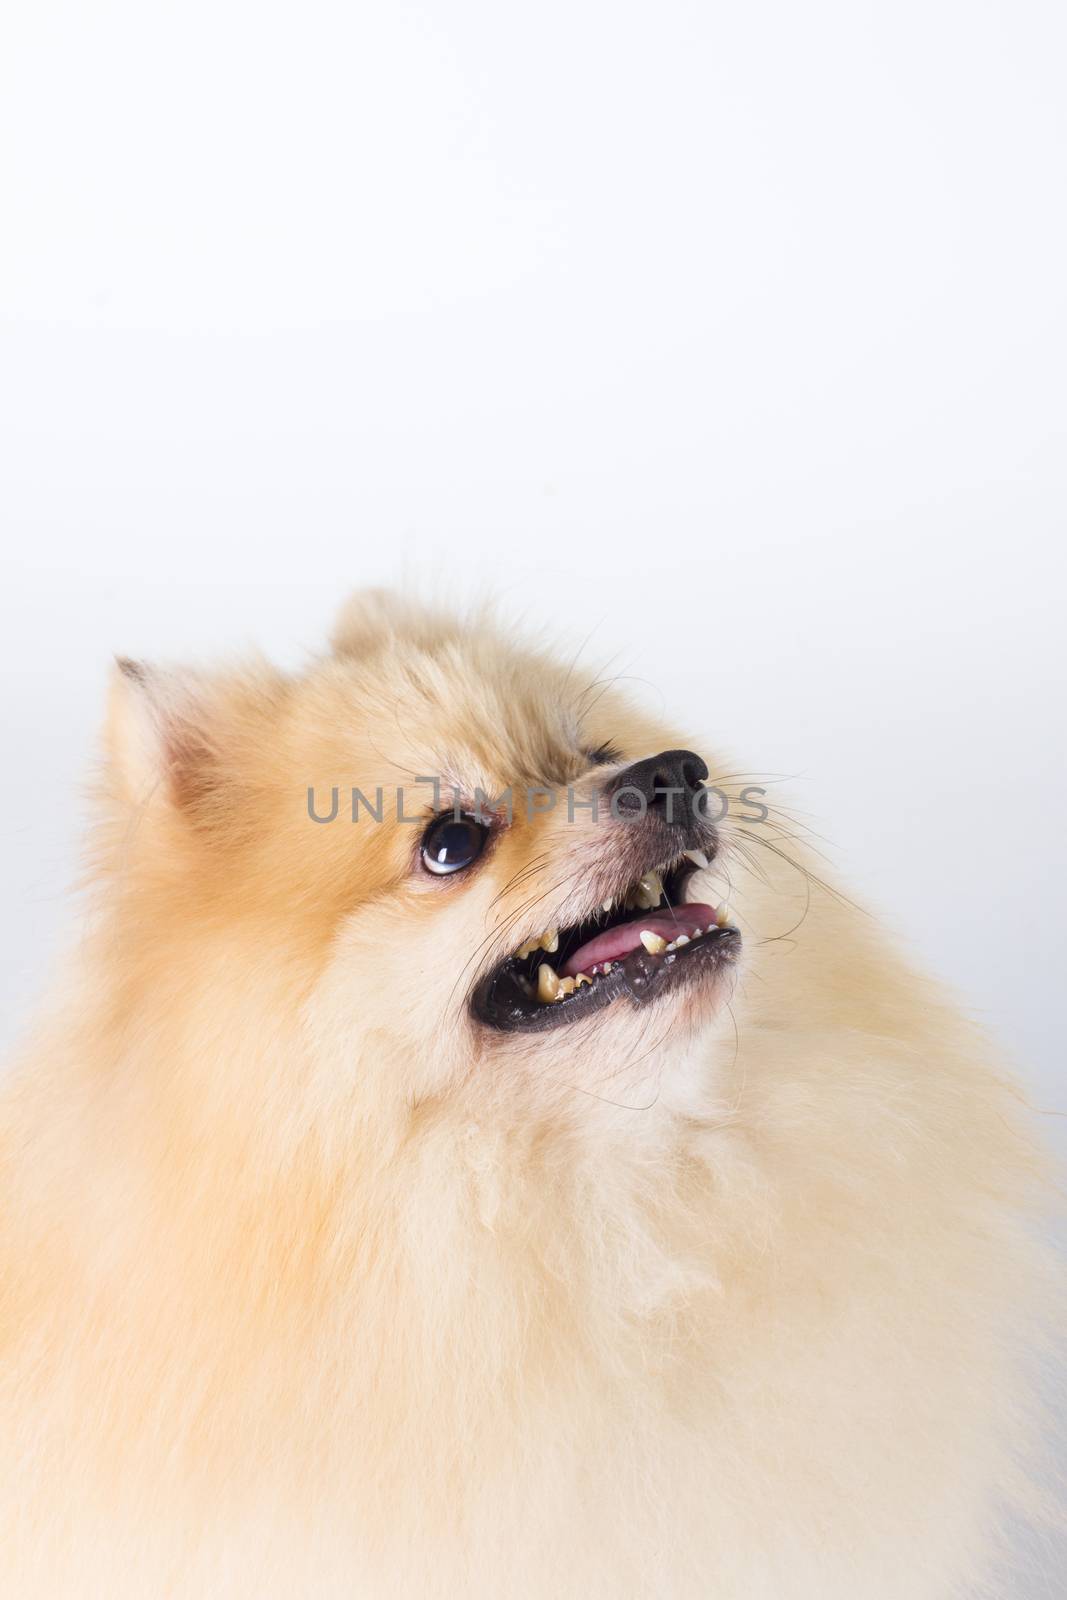 Pomeranian show champion dog, on white background by jee1999